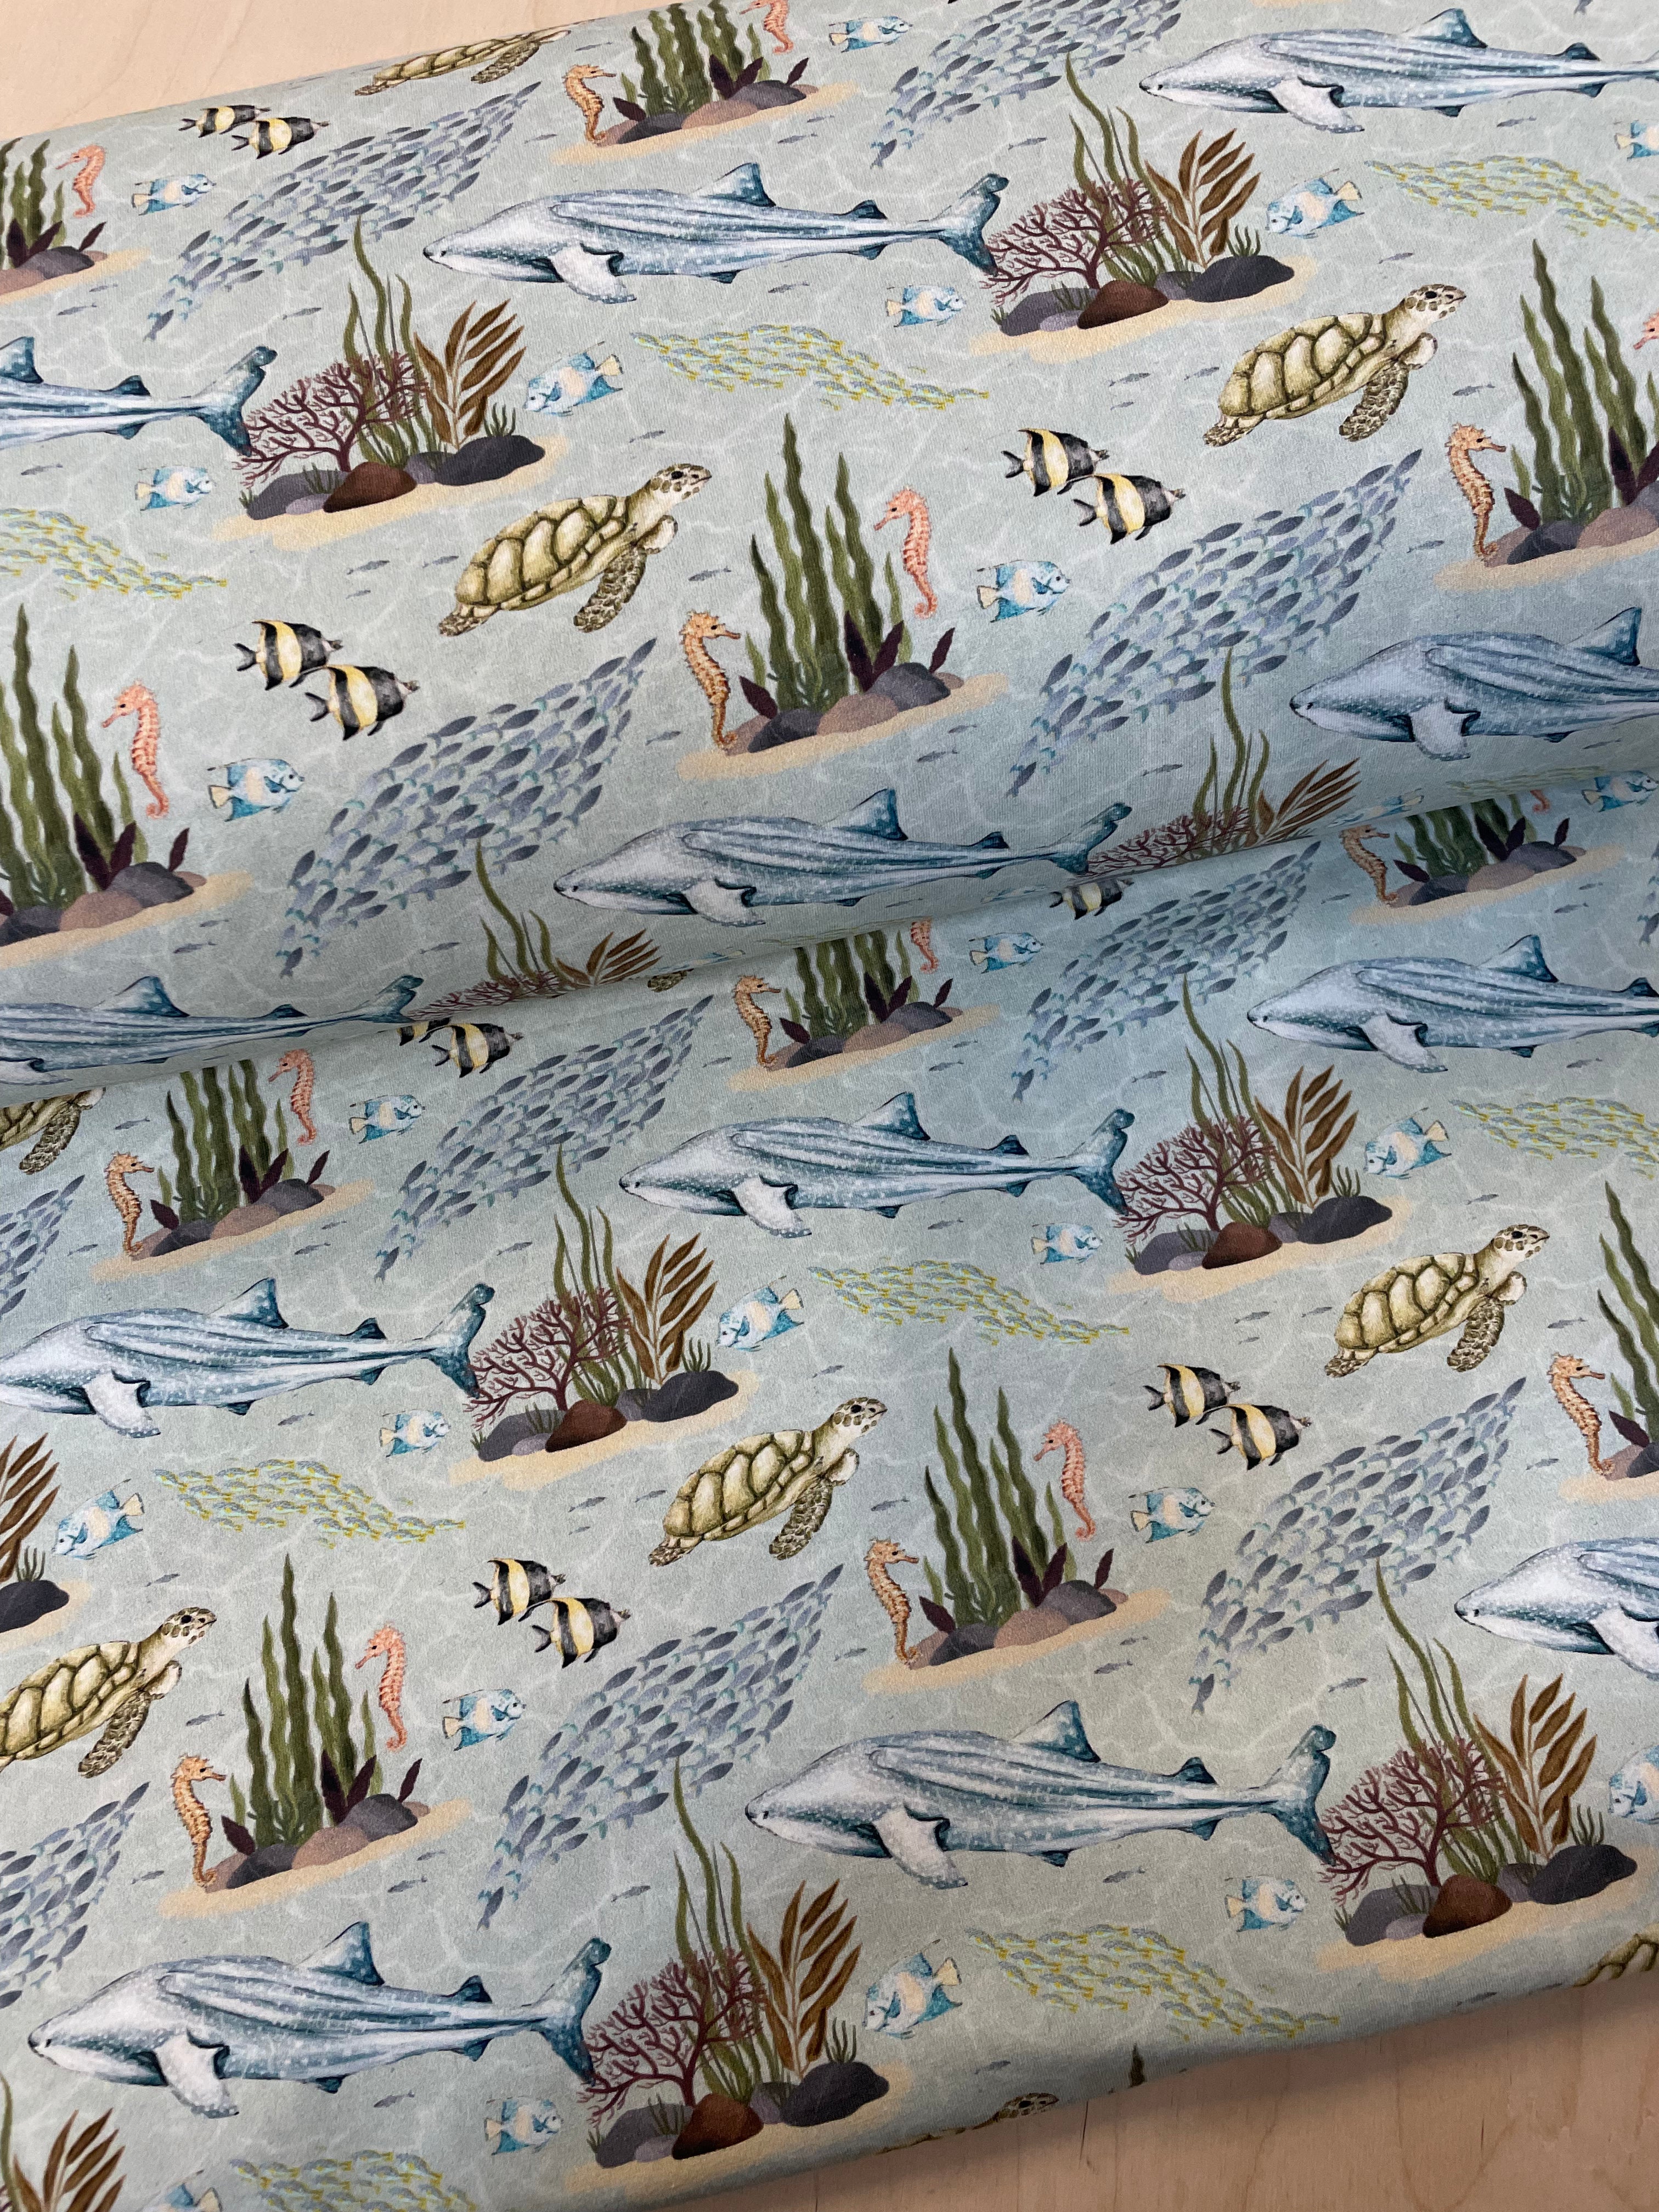 SALE Ocean Life Mint Cotton Jersey Fabric